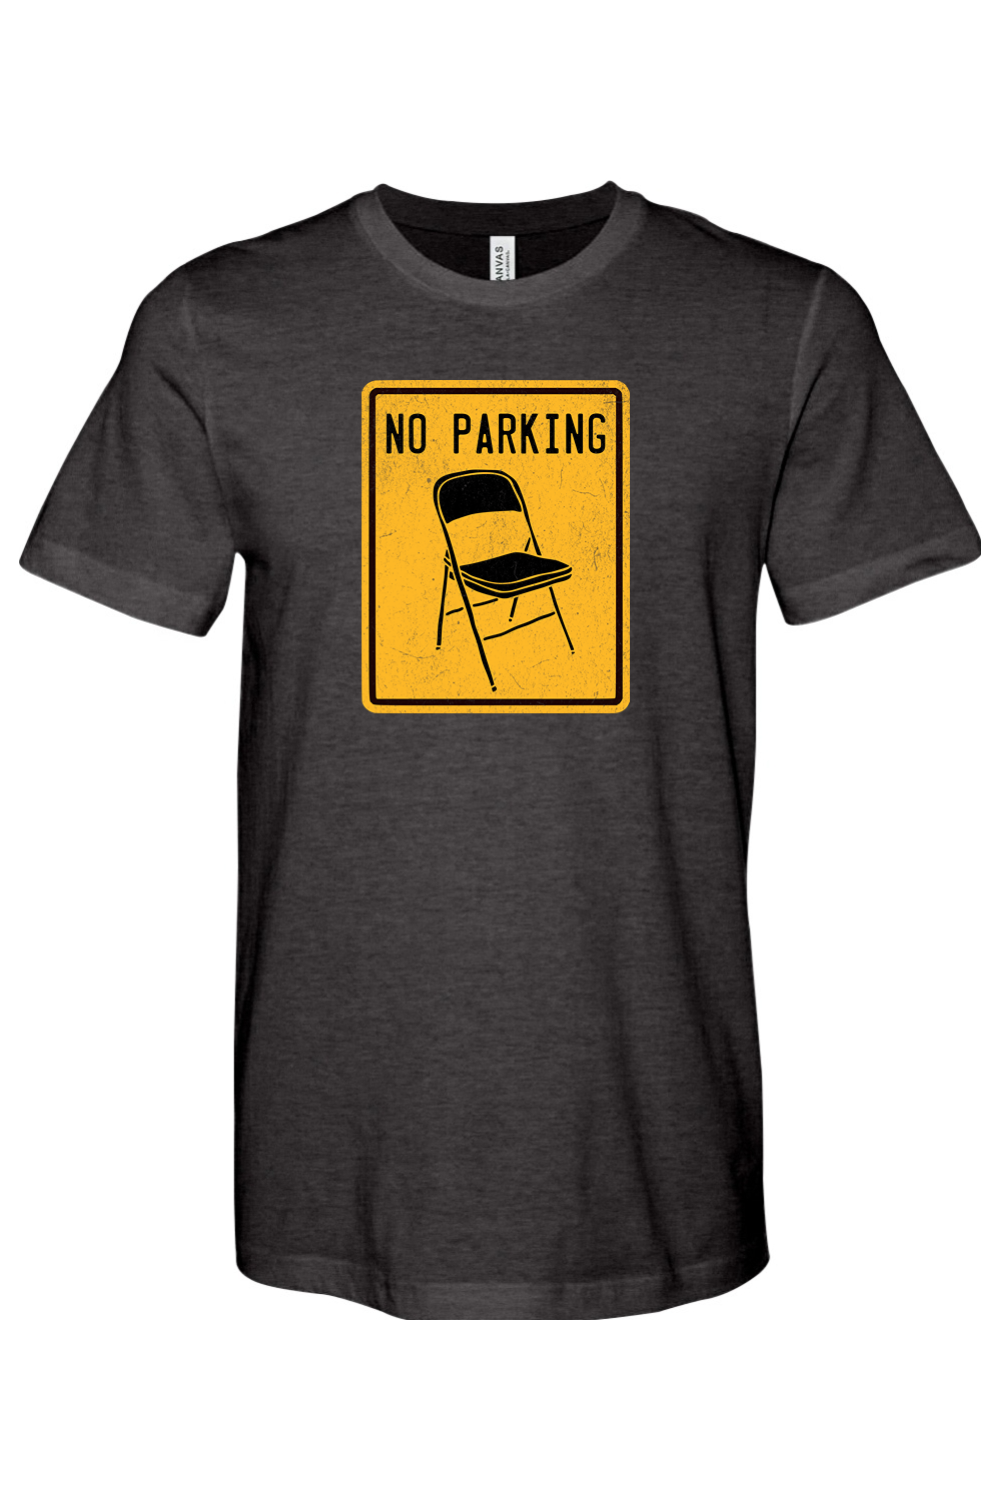 Parking Chair - Yinzylvania